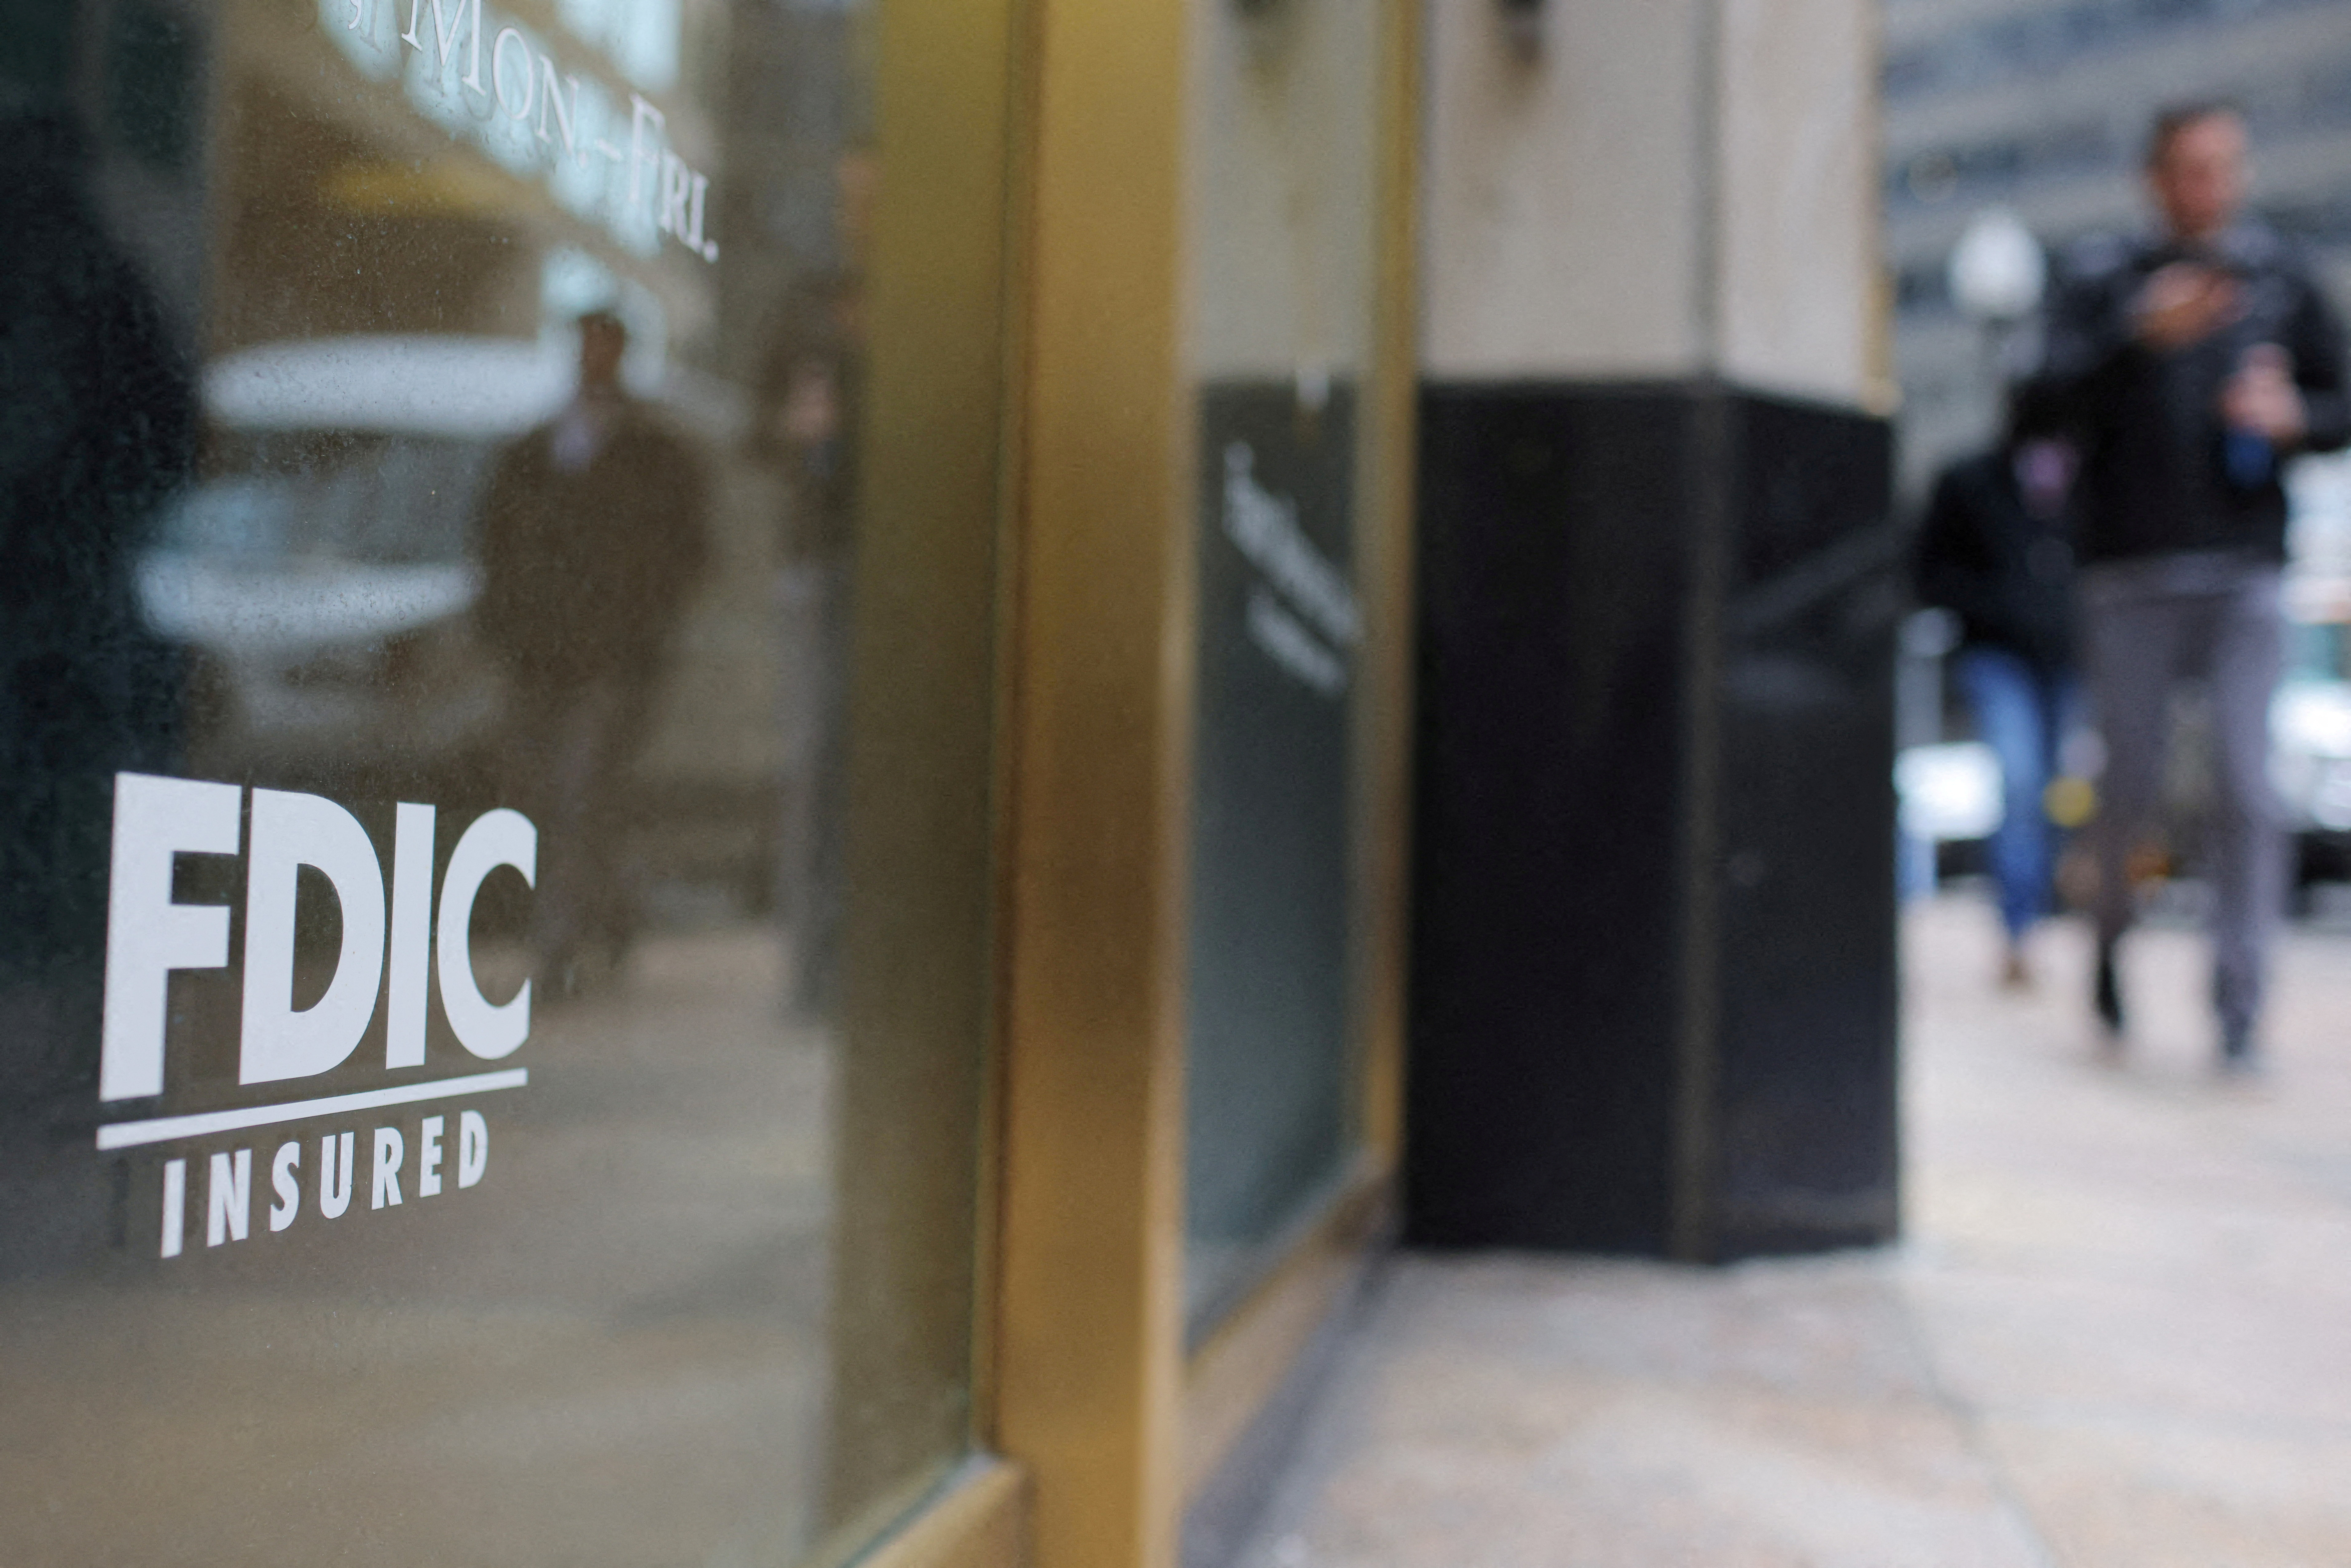 Un cartel reza "FDIC Insured" en la puerta de una sucursal del First Republic Bank en Boston, Massachusetts, Estados Unidos (Reuters)